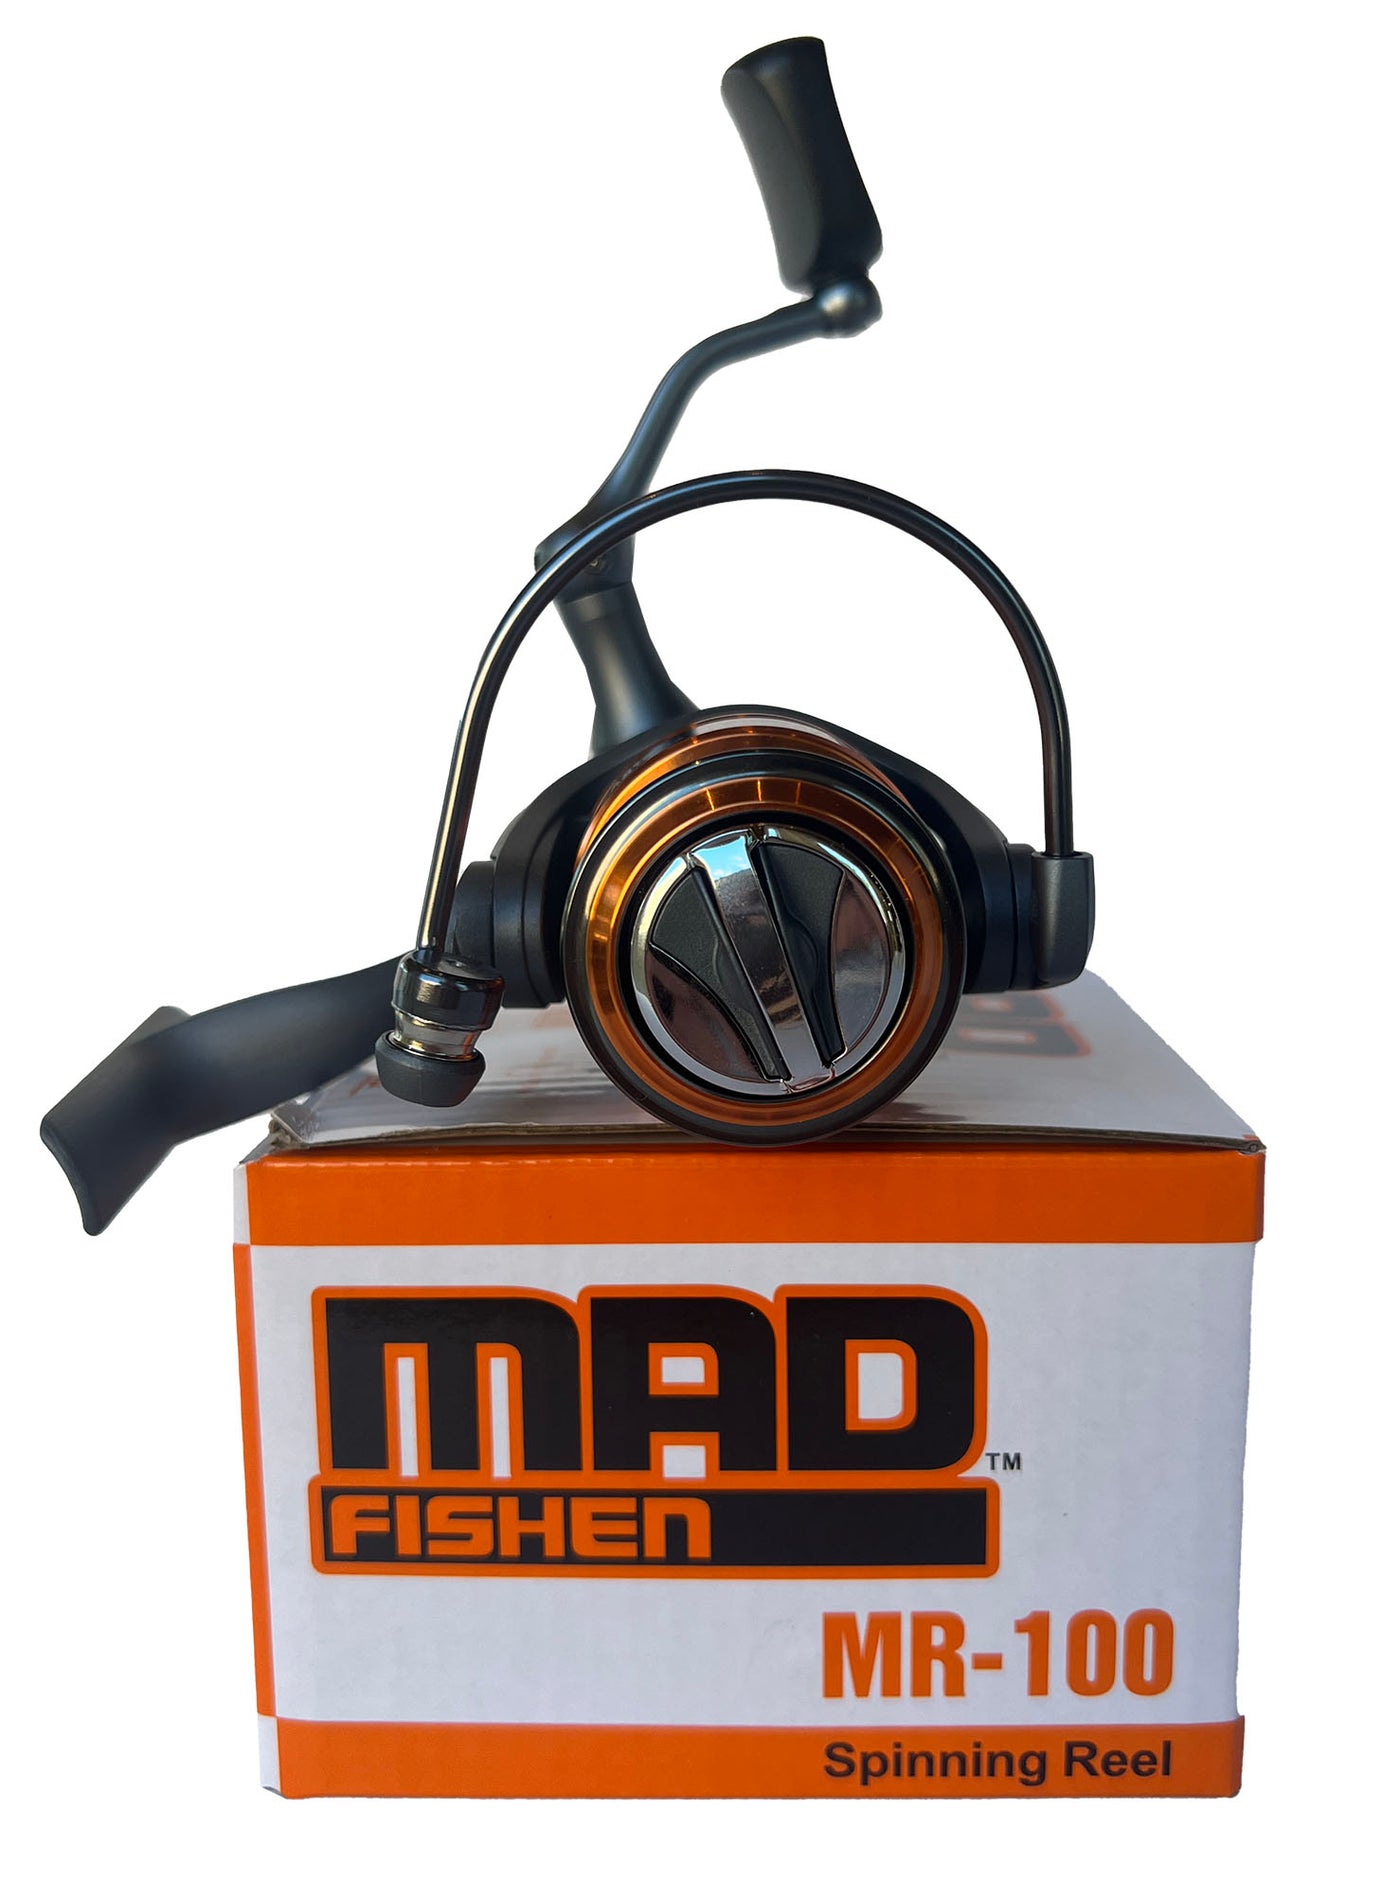 MAD FISHEN spinning reel, MR100 series